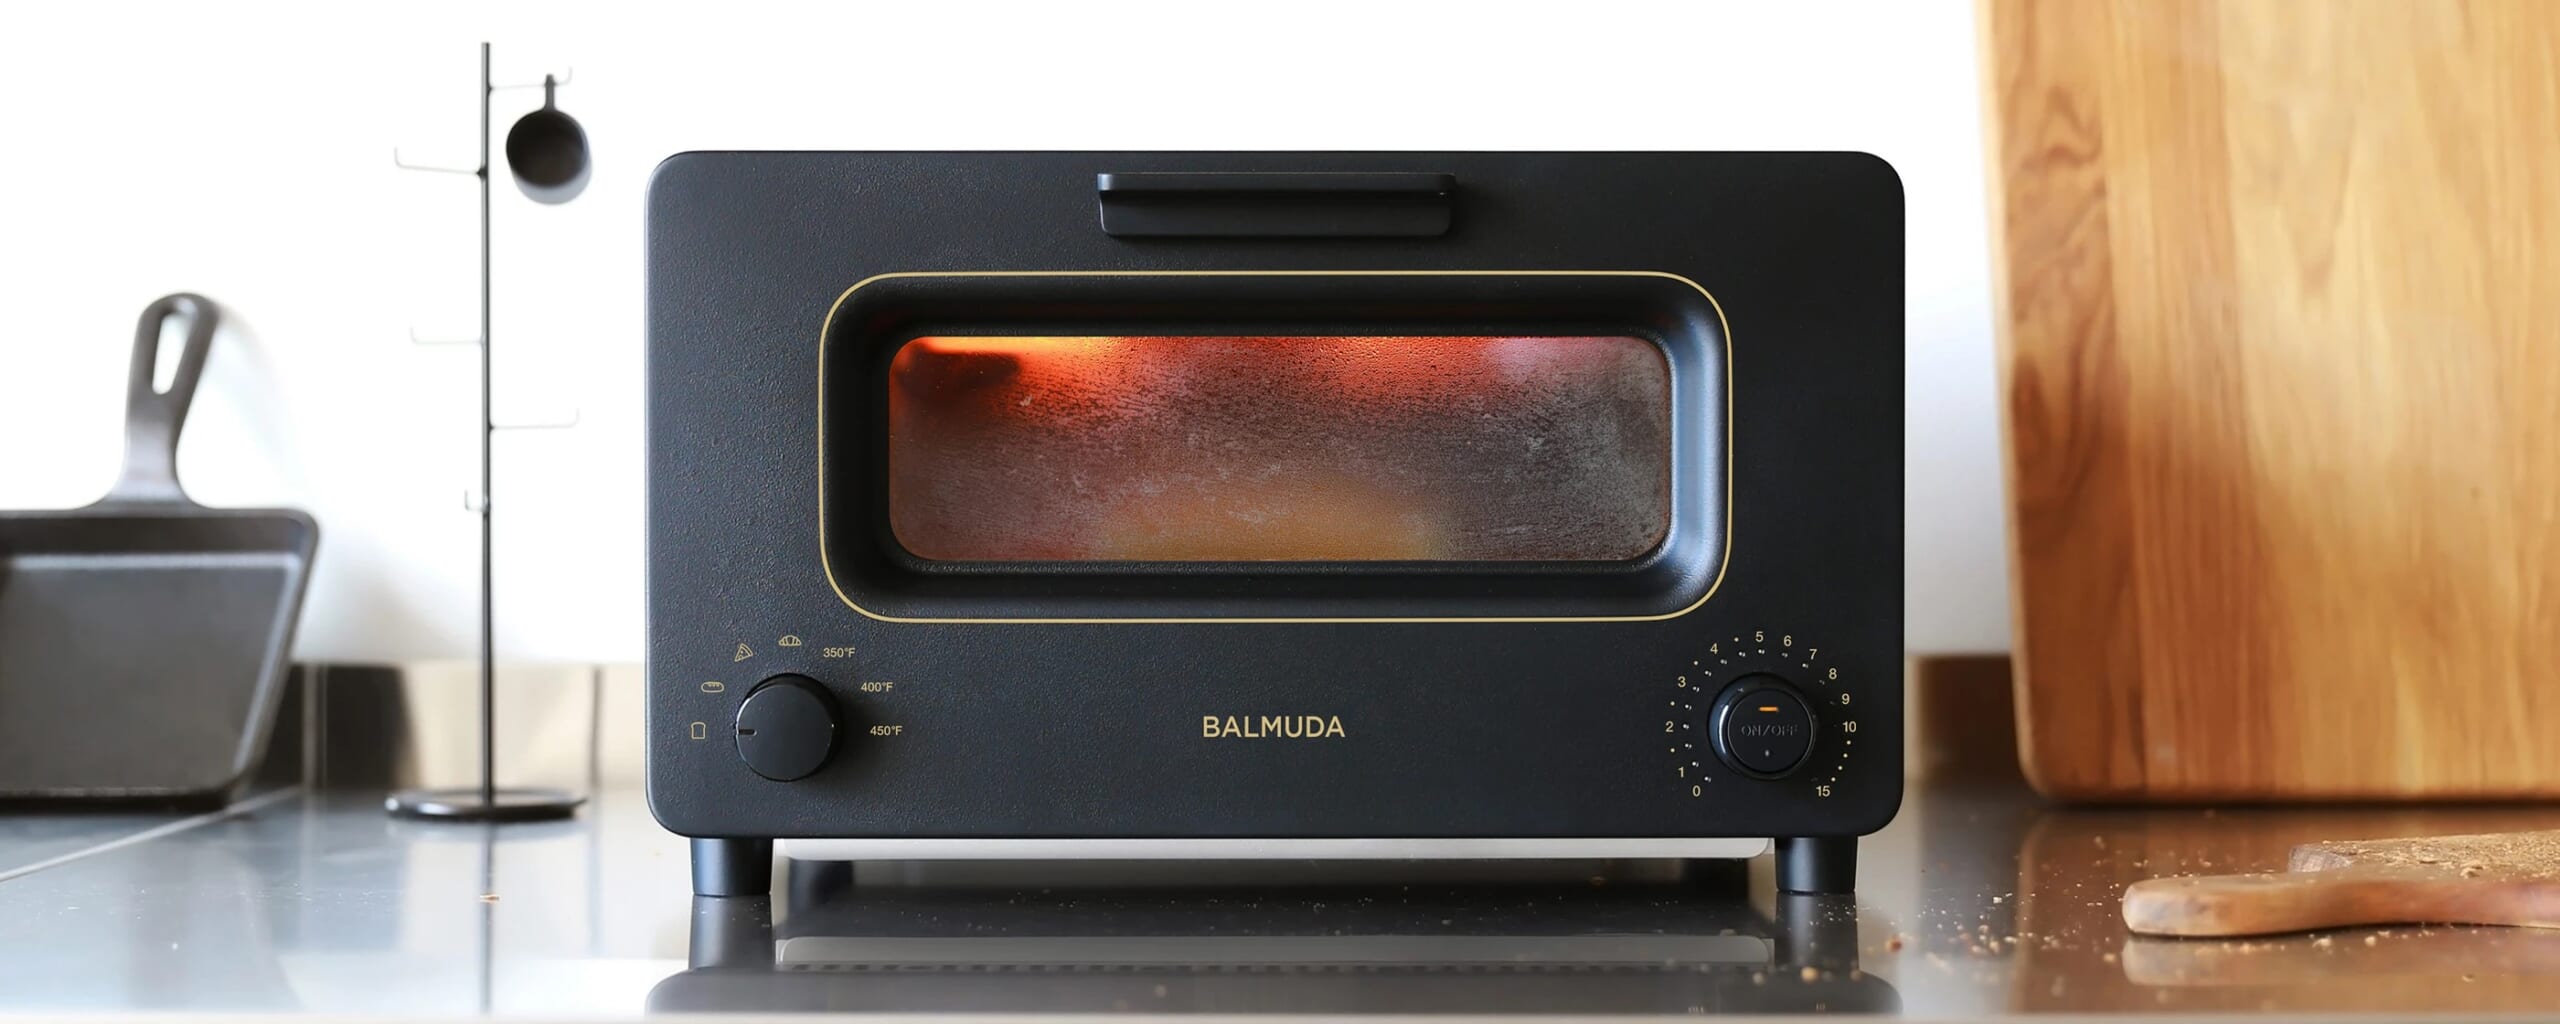 https://www.maxim.com/wp-content/uploads/2021/05/balmuda-the-toaster-2-scaled.jpg